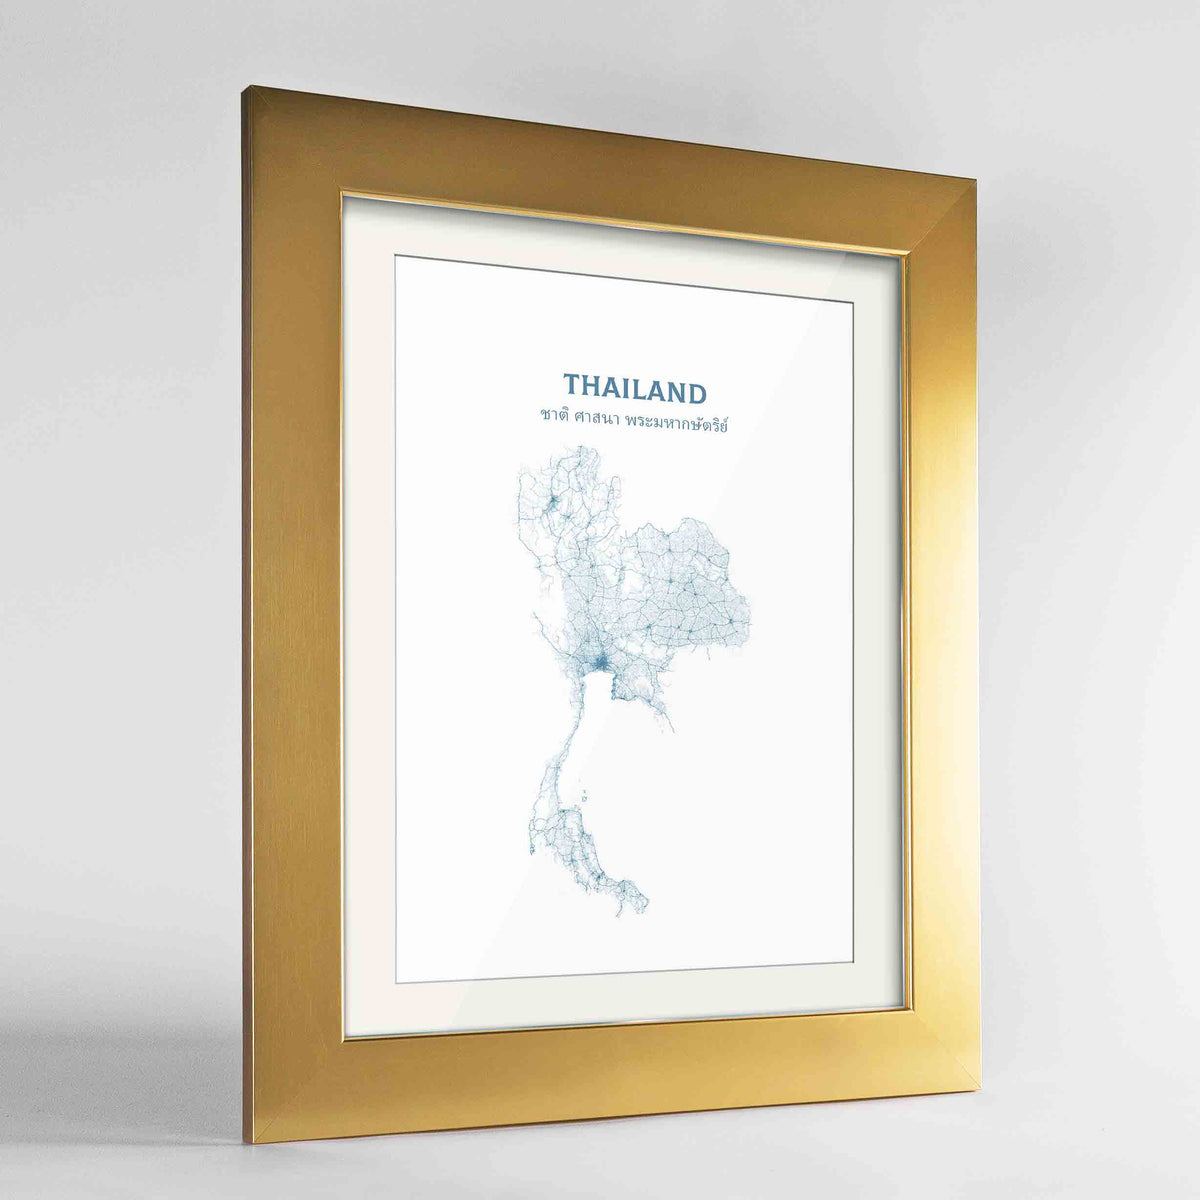 Thailand - All Roads Art Print - Framed